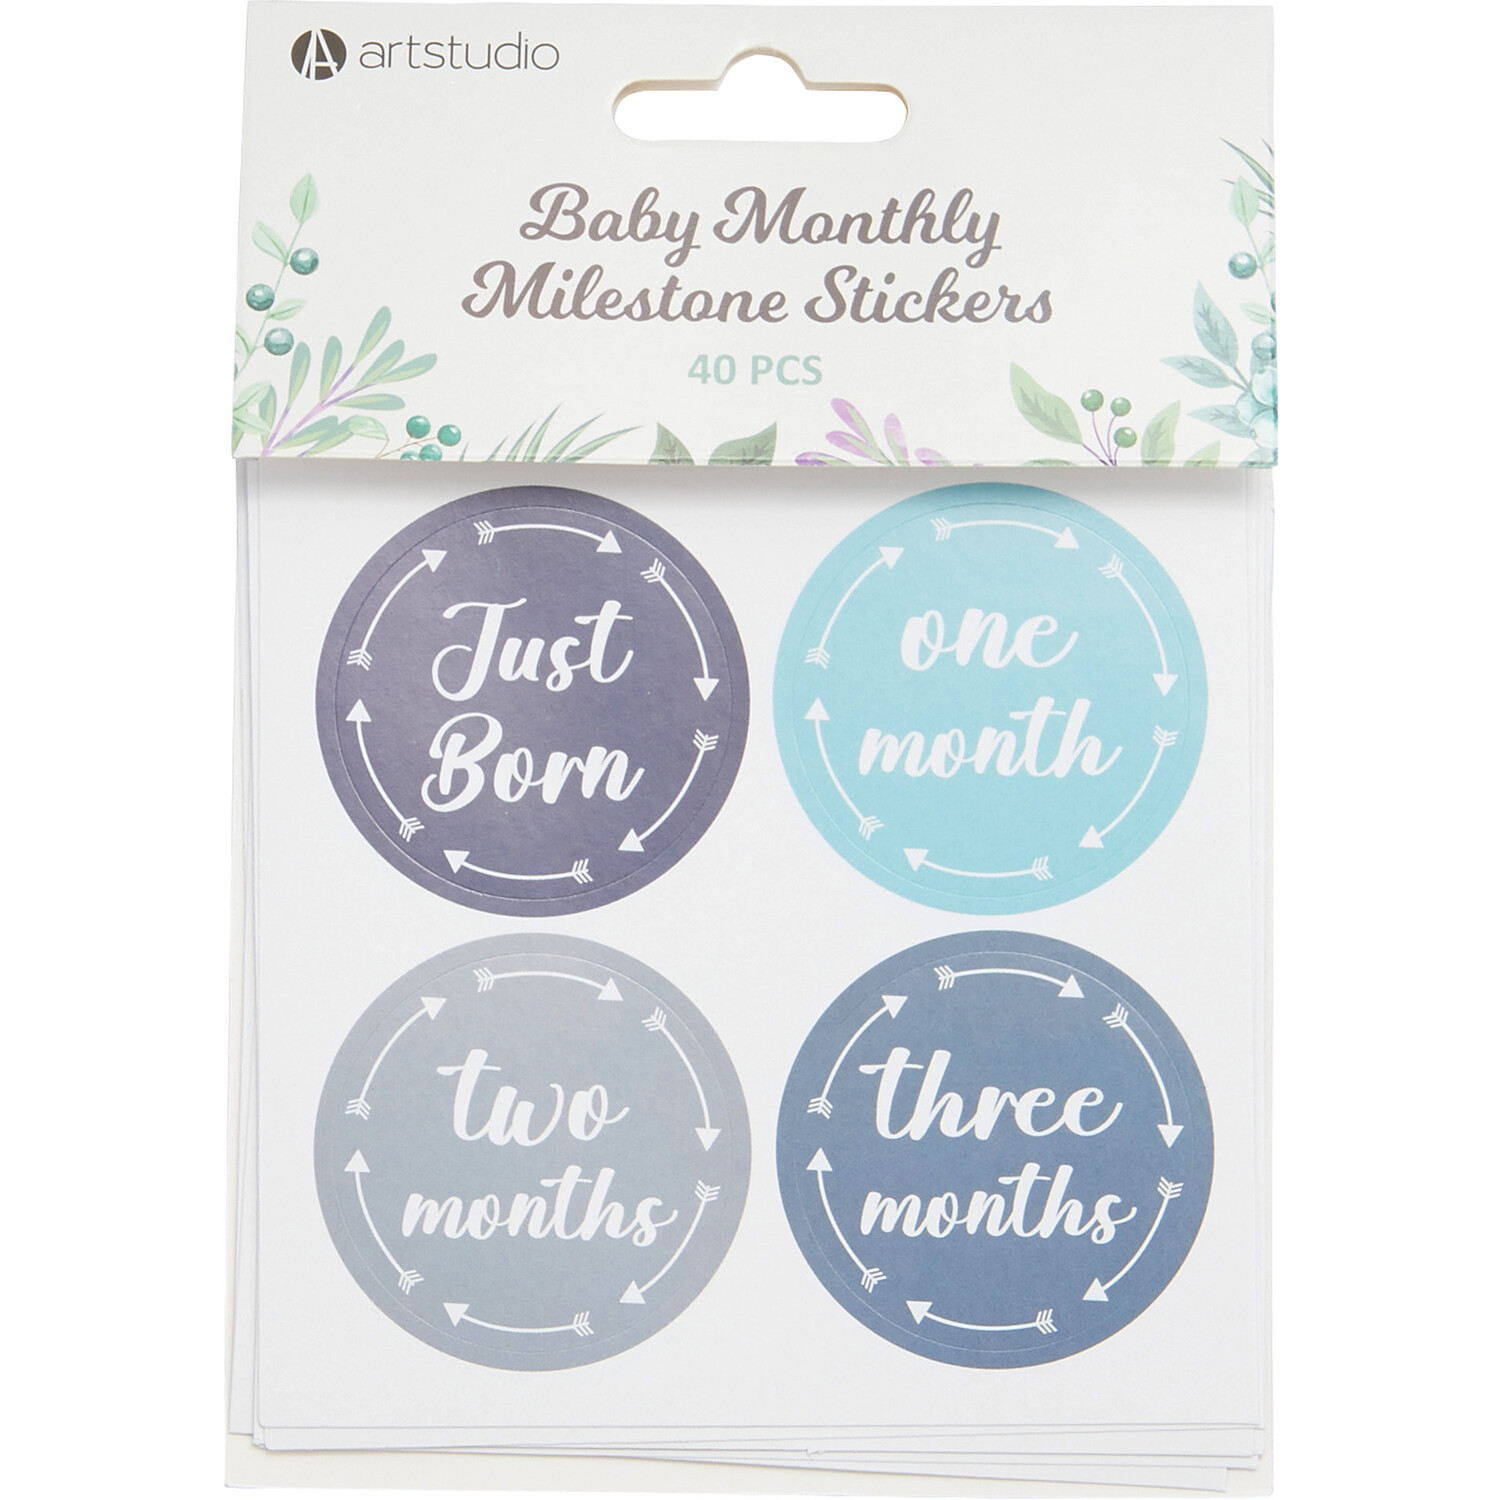 Single Art Studio Baby Monthly Milestone Stickers in Assorted styles Image 1